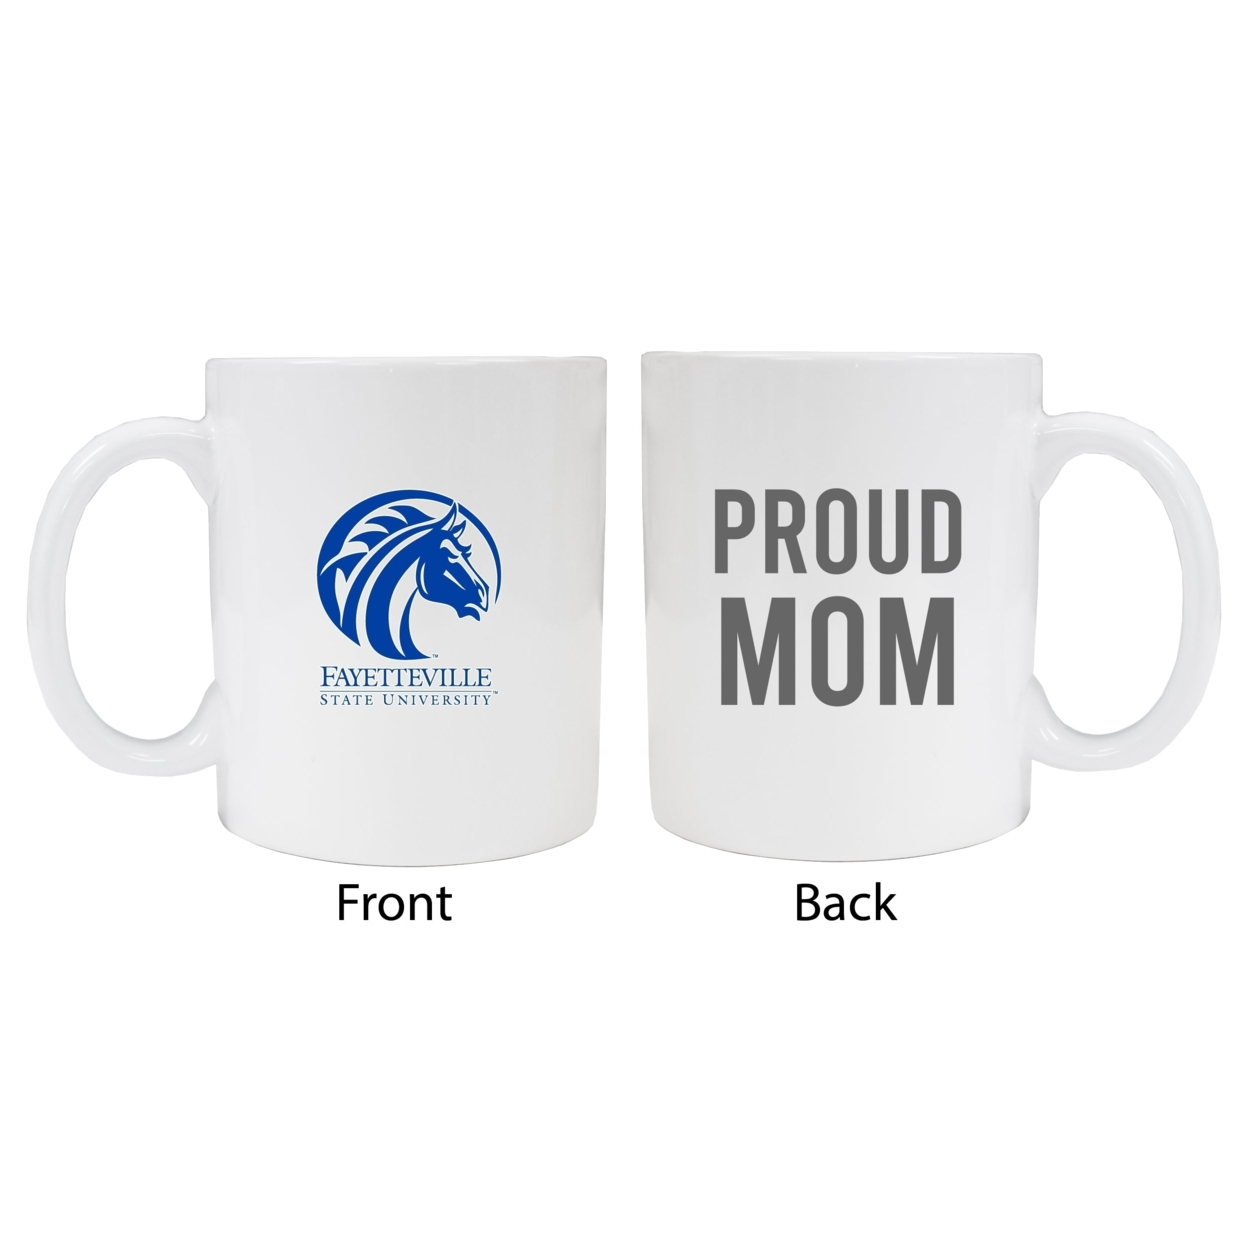 Fayetteville State University Proud Mom Ceramic Coffee Mug - White (2 Pack)